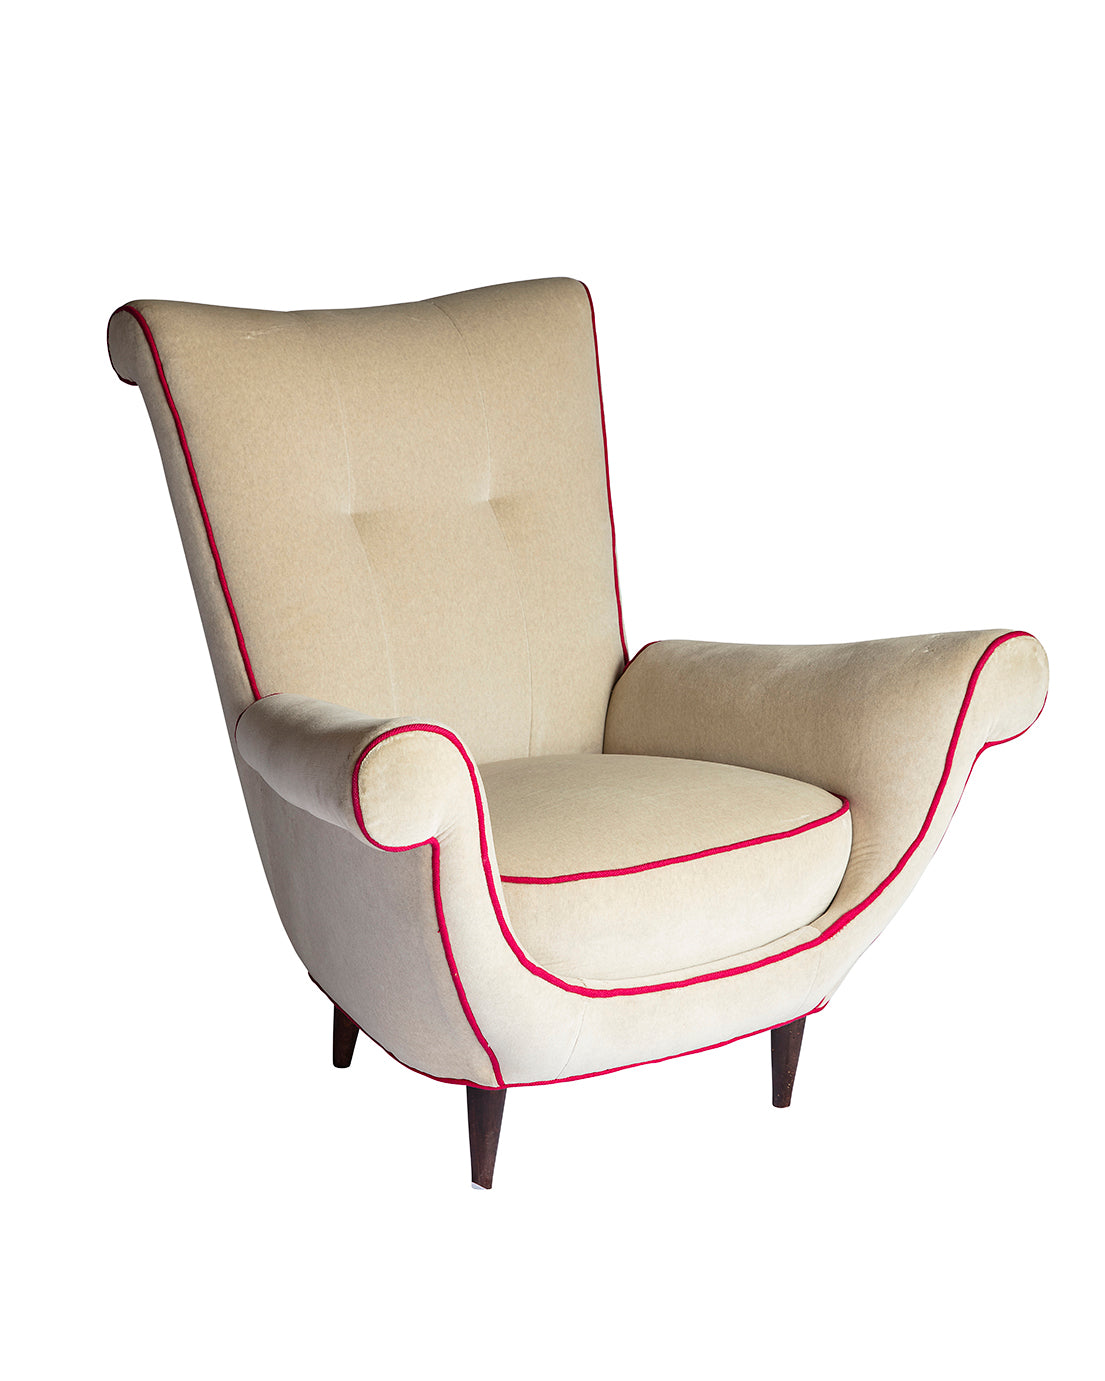 Grey velvet armchair from ISA Bergamo. Italy, 1960s